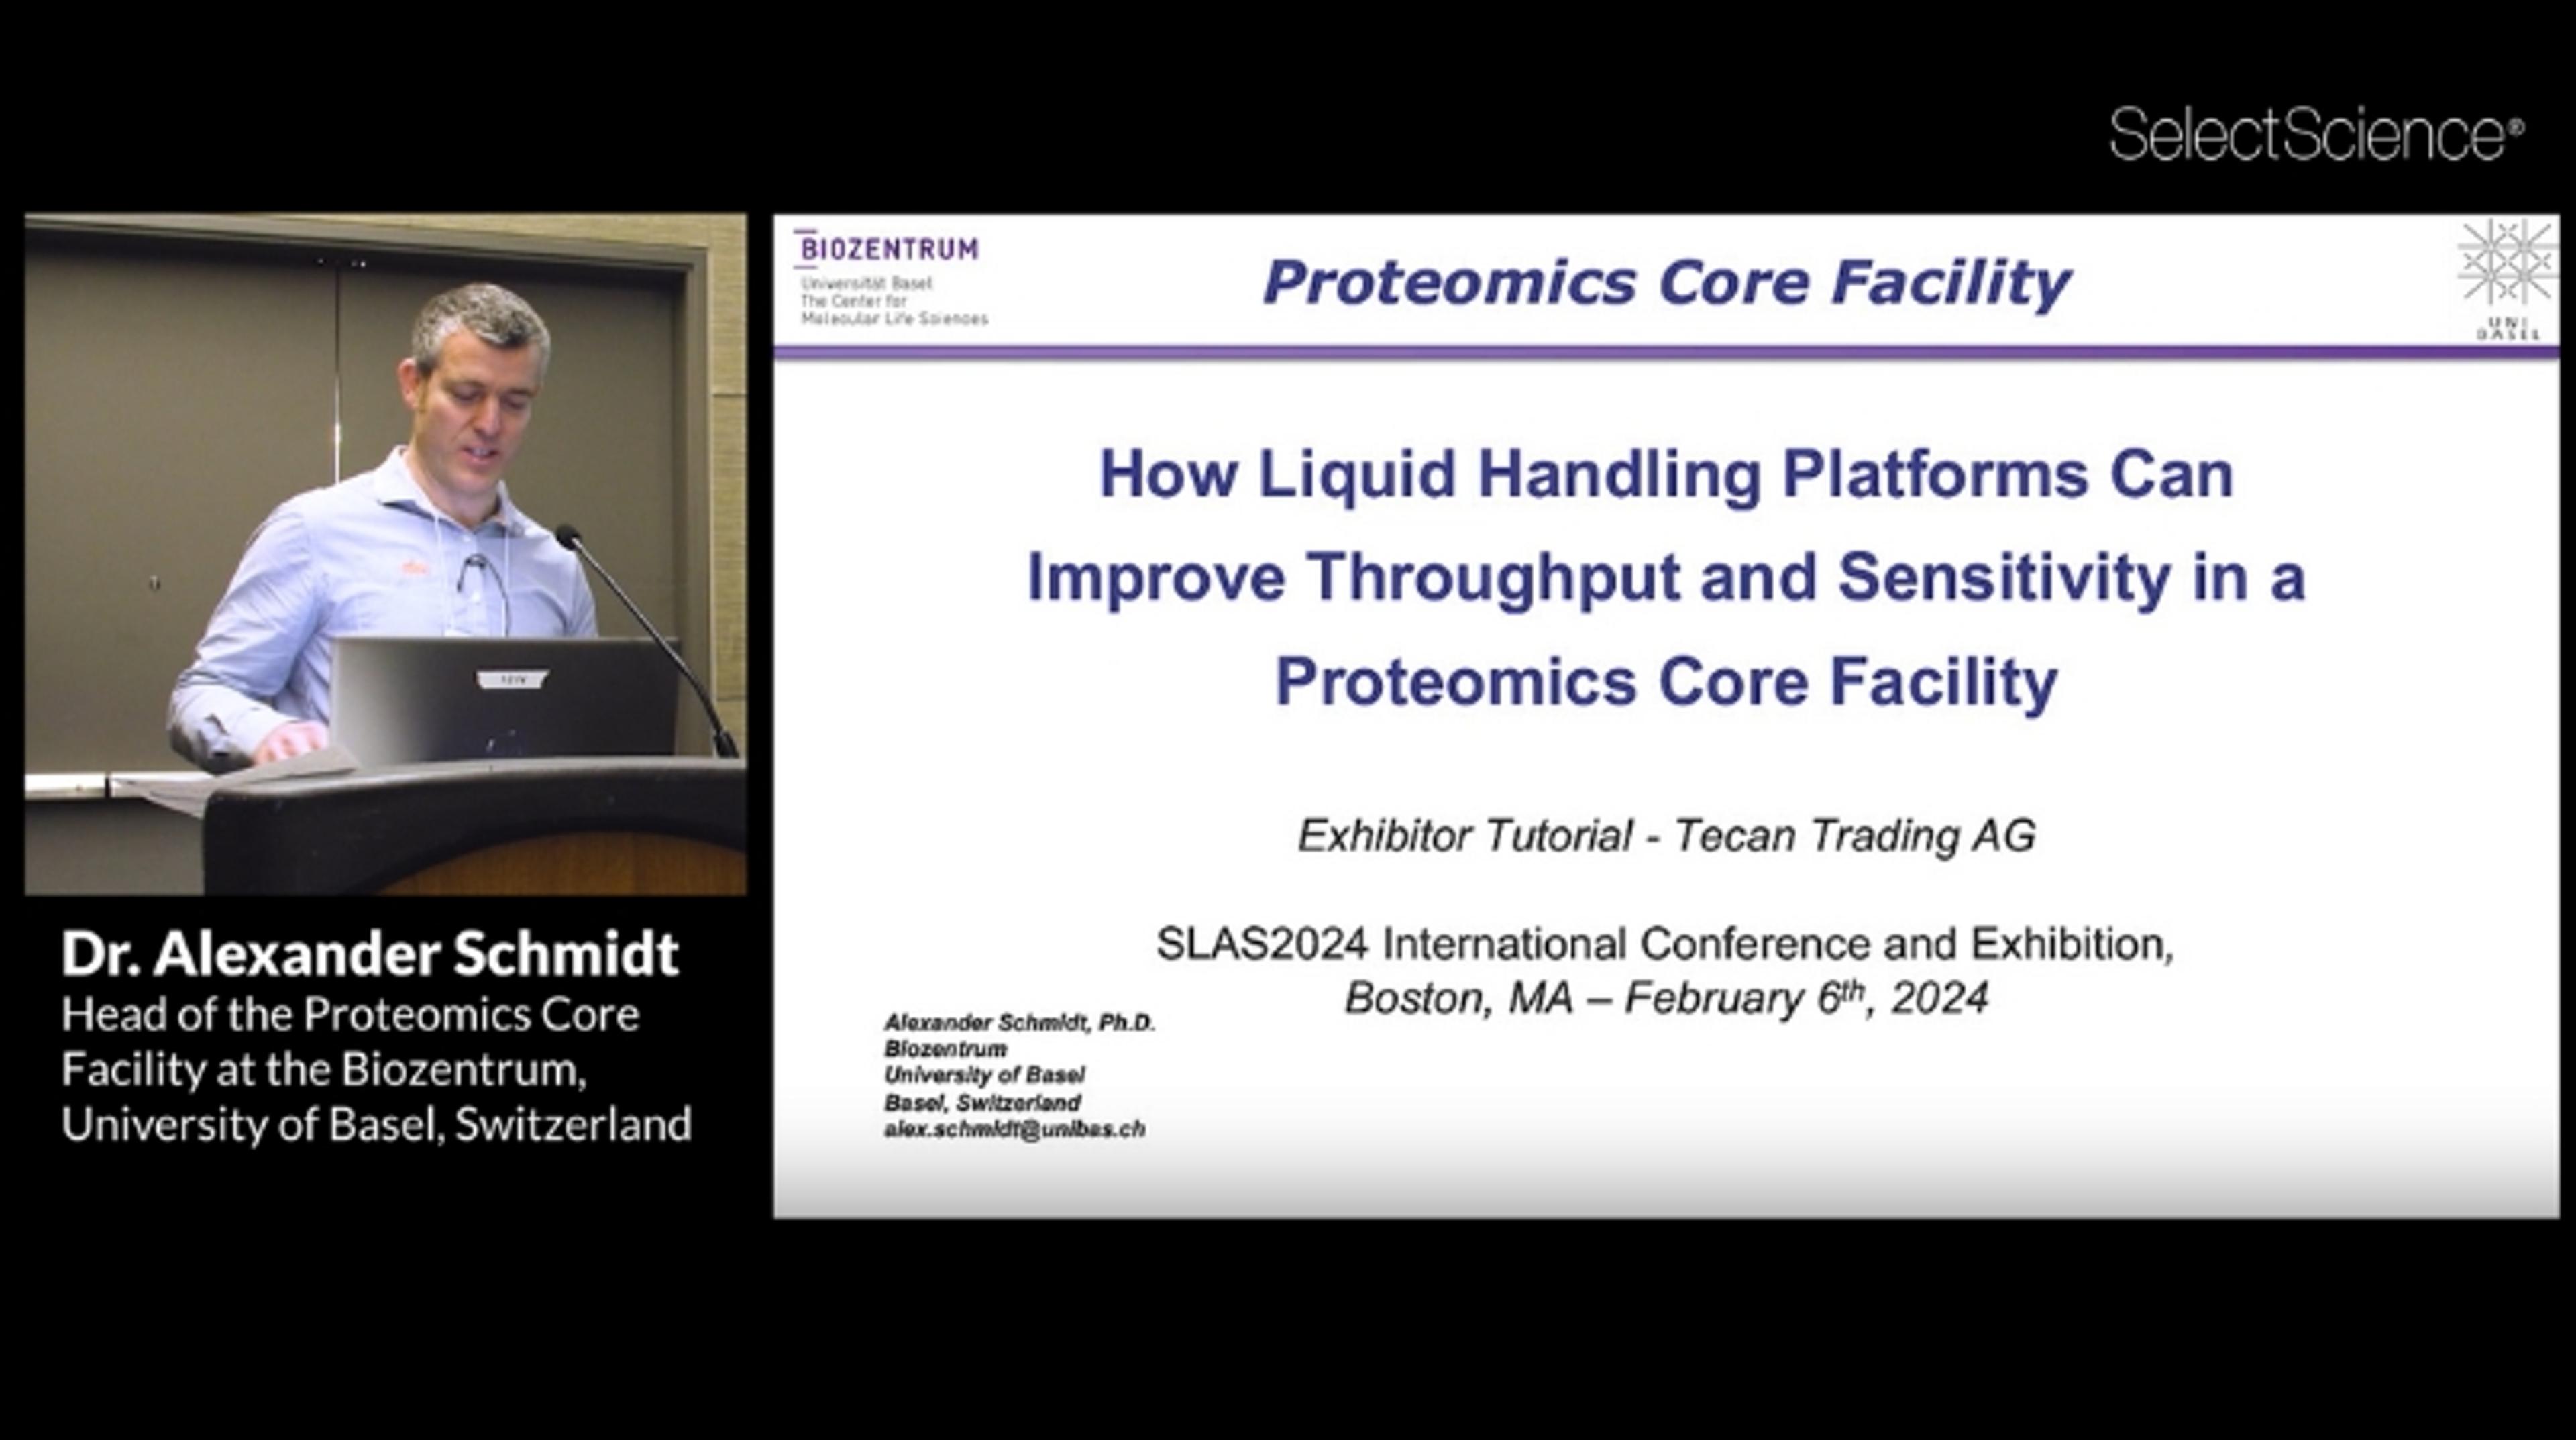 Automated liquid handling platforms advance proteomics research